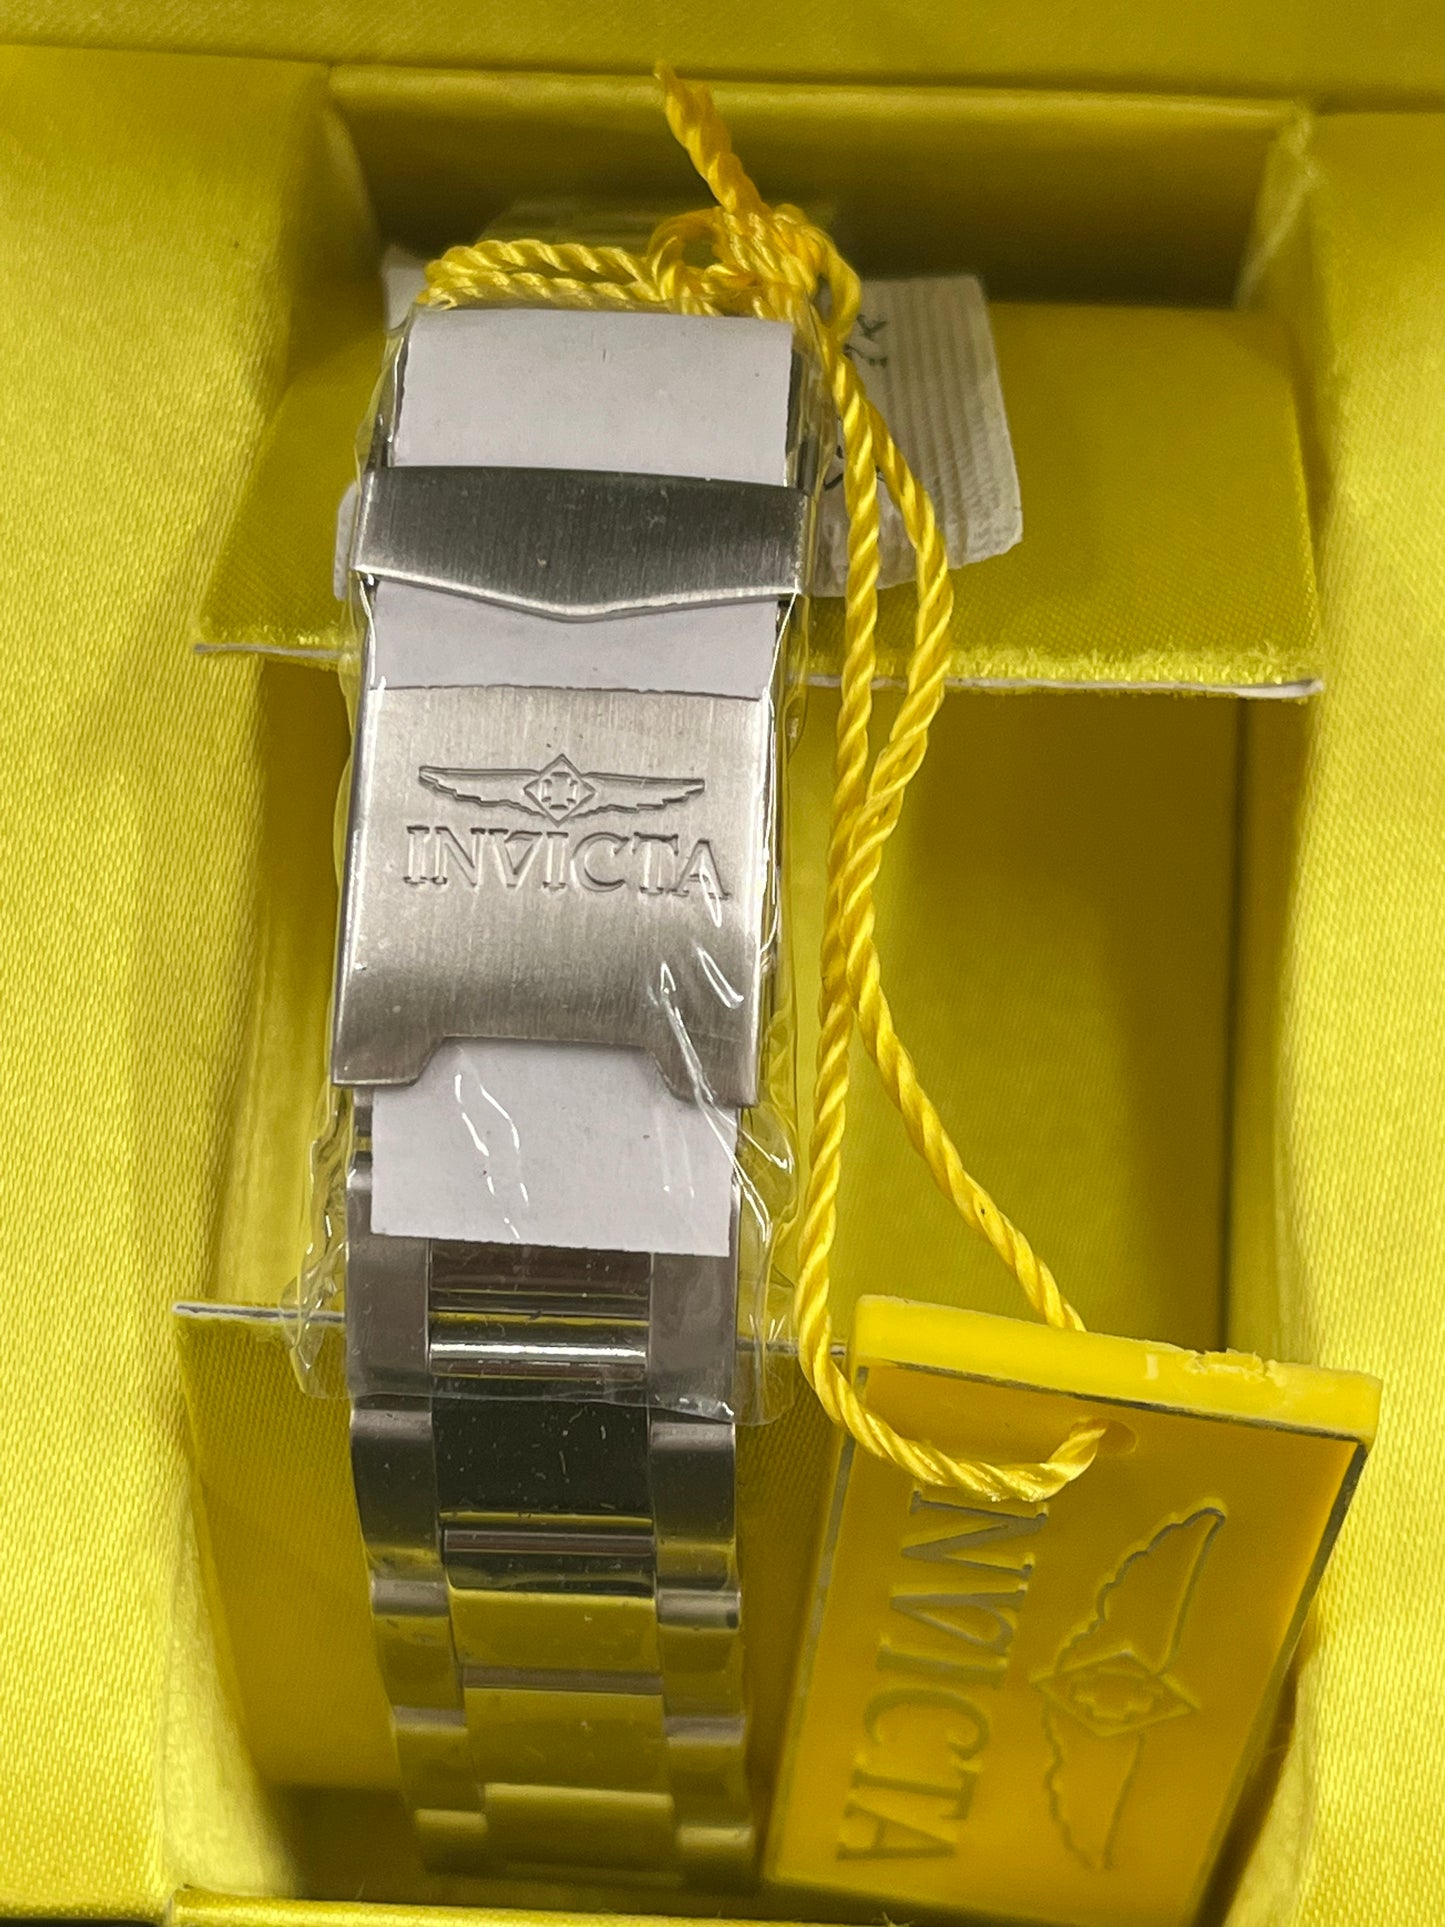 Invicta Men's 9204OB Pro Diver Analog Display Quartz Silver Watch